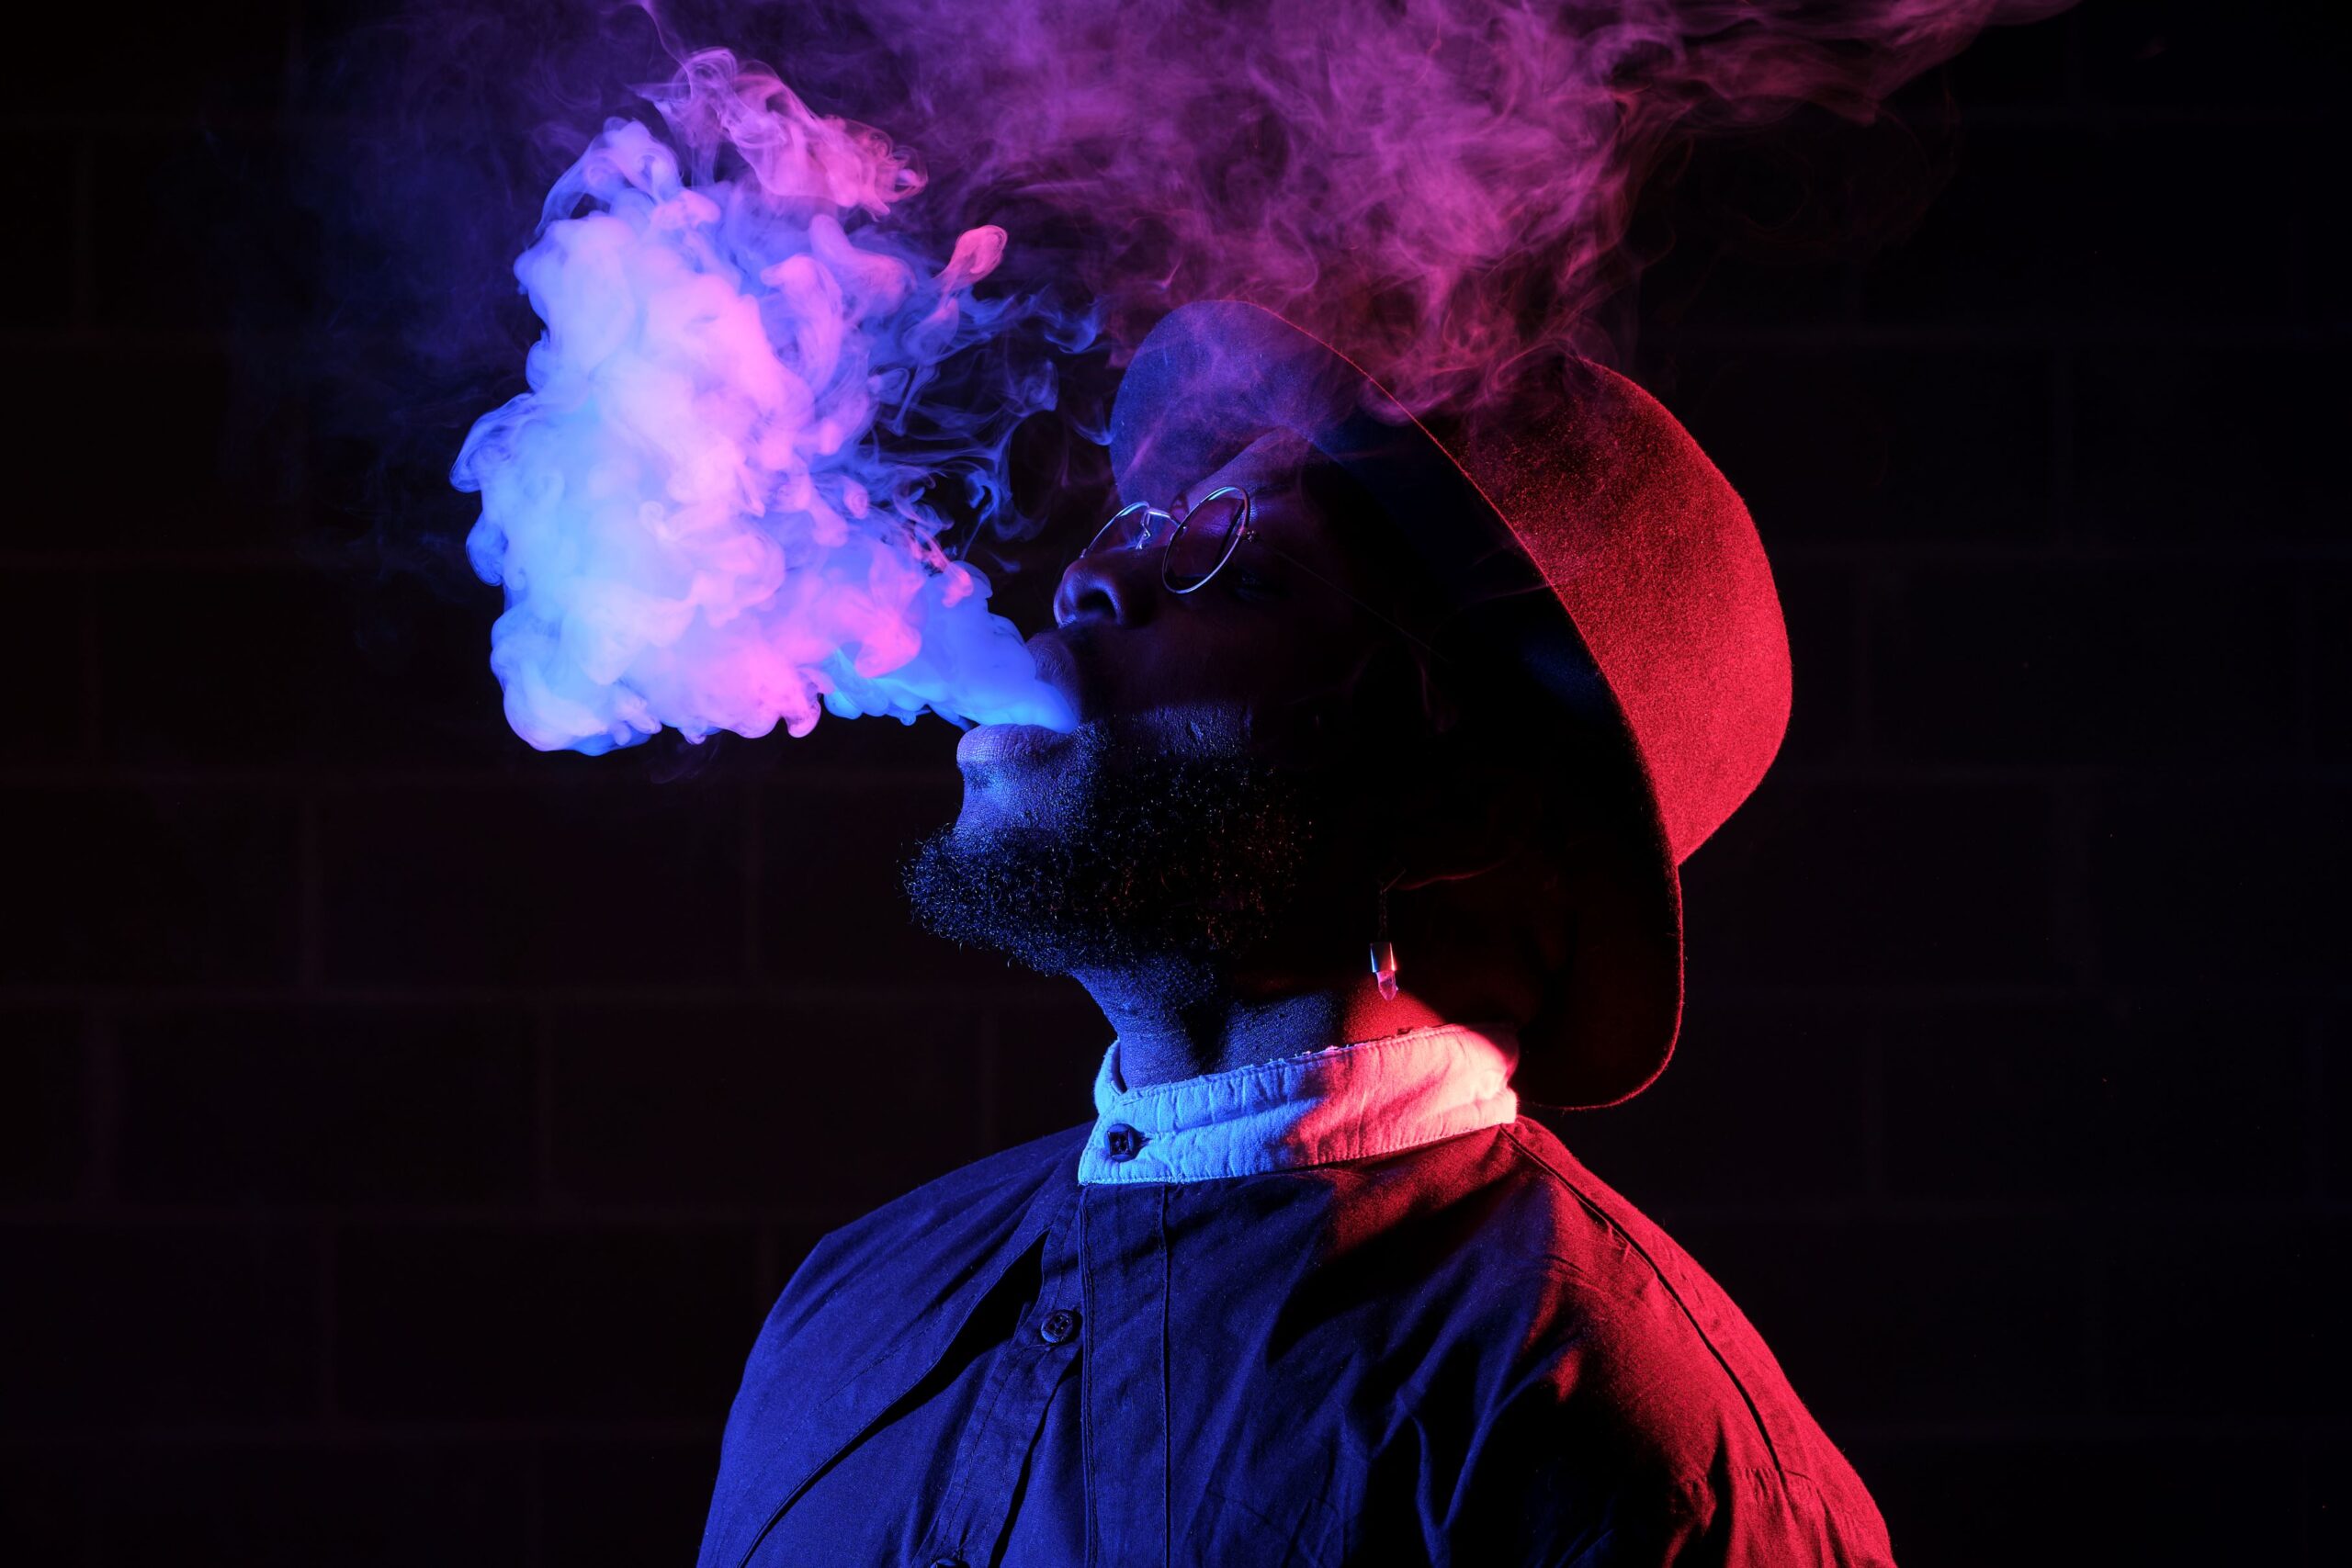 Man blowing smoke cloud upwards in red, blue, and purple lighting